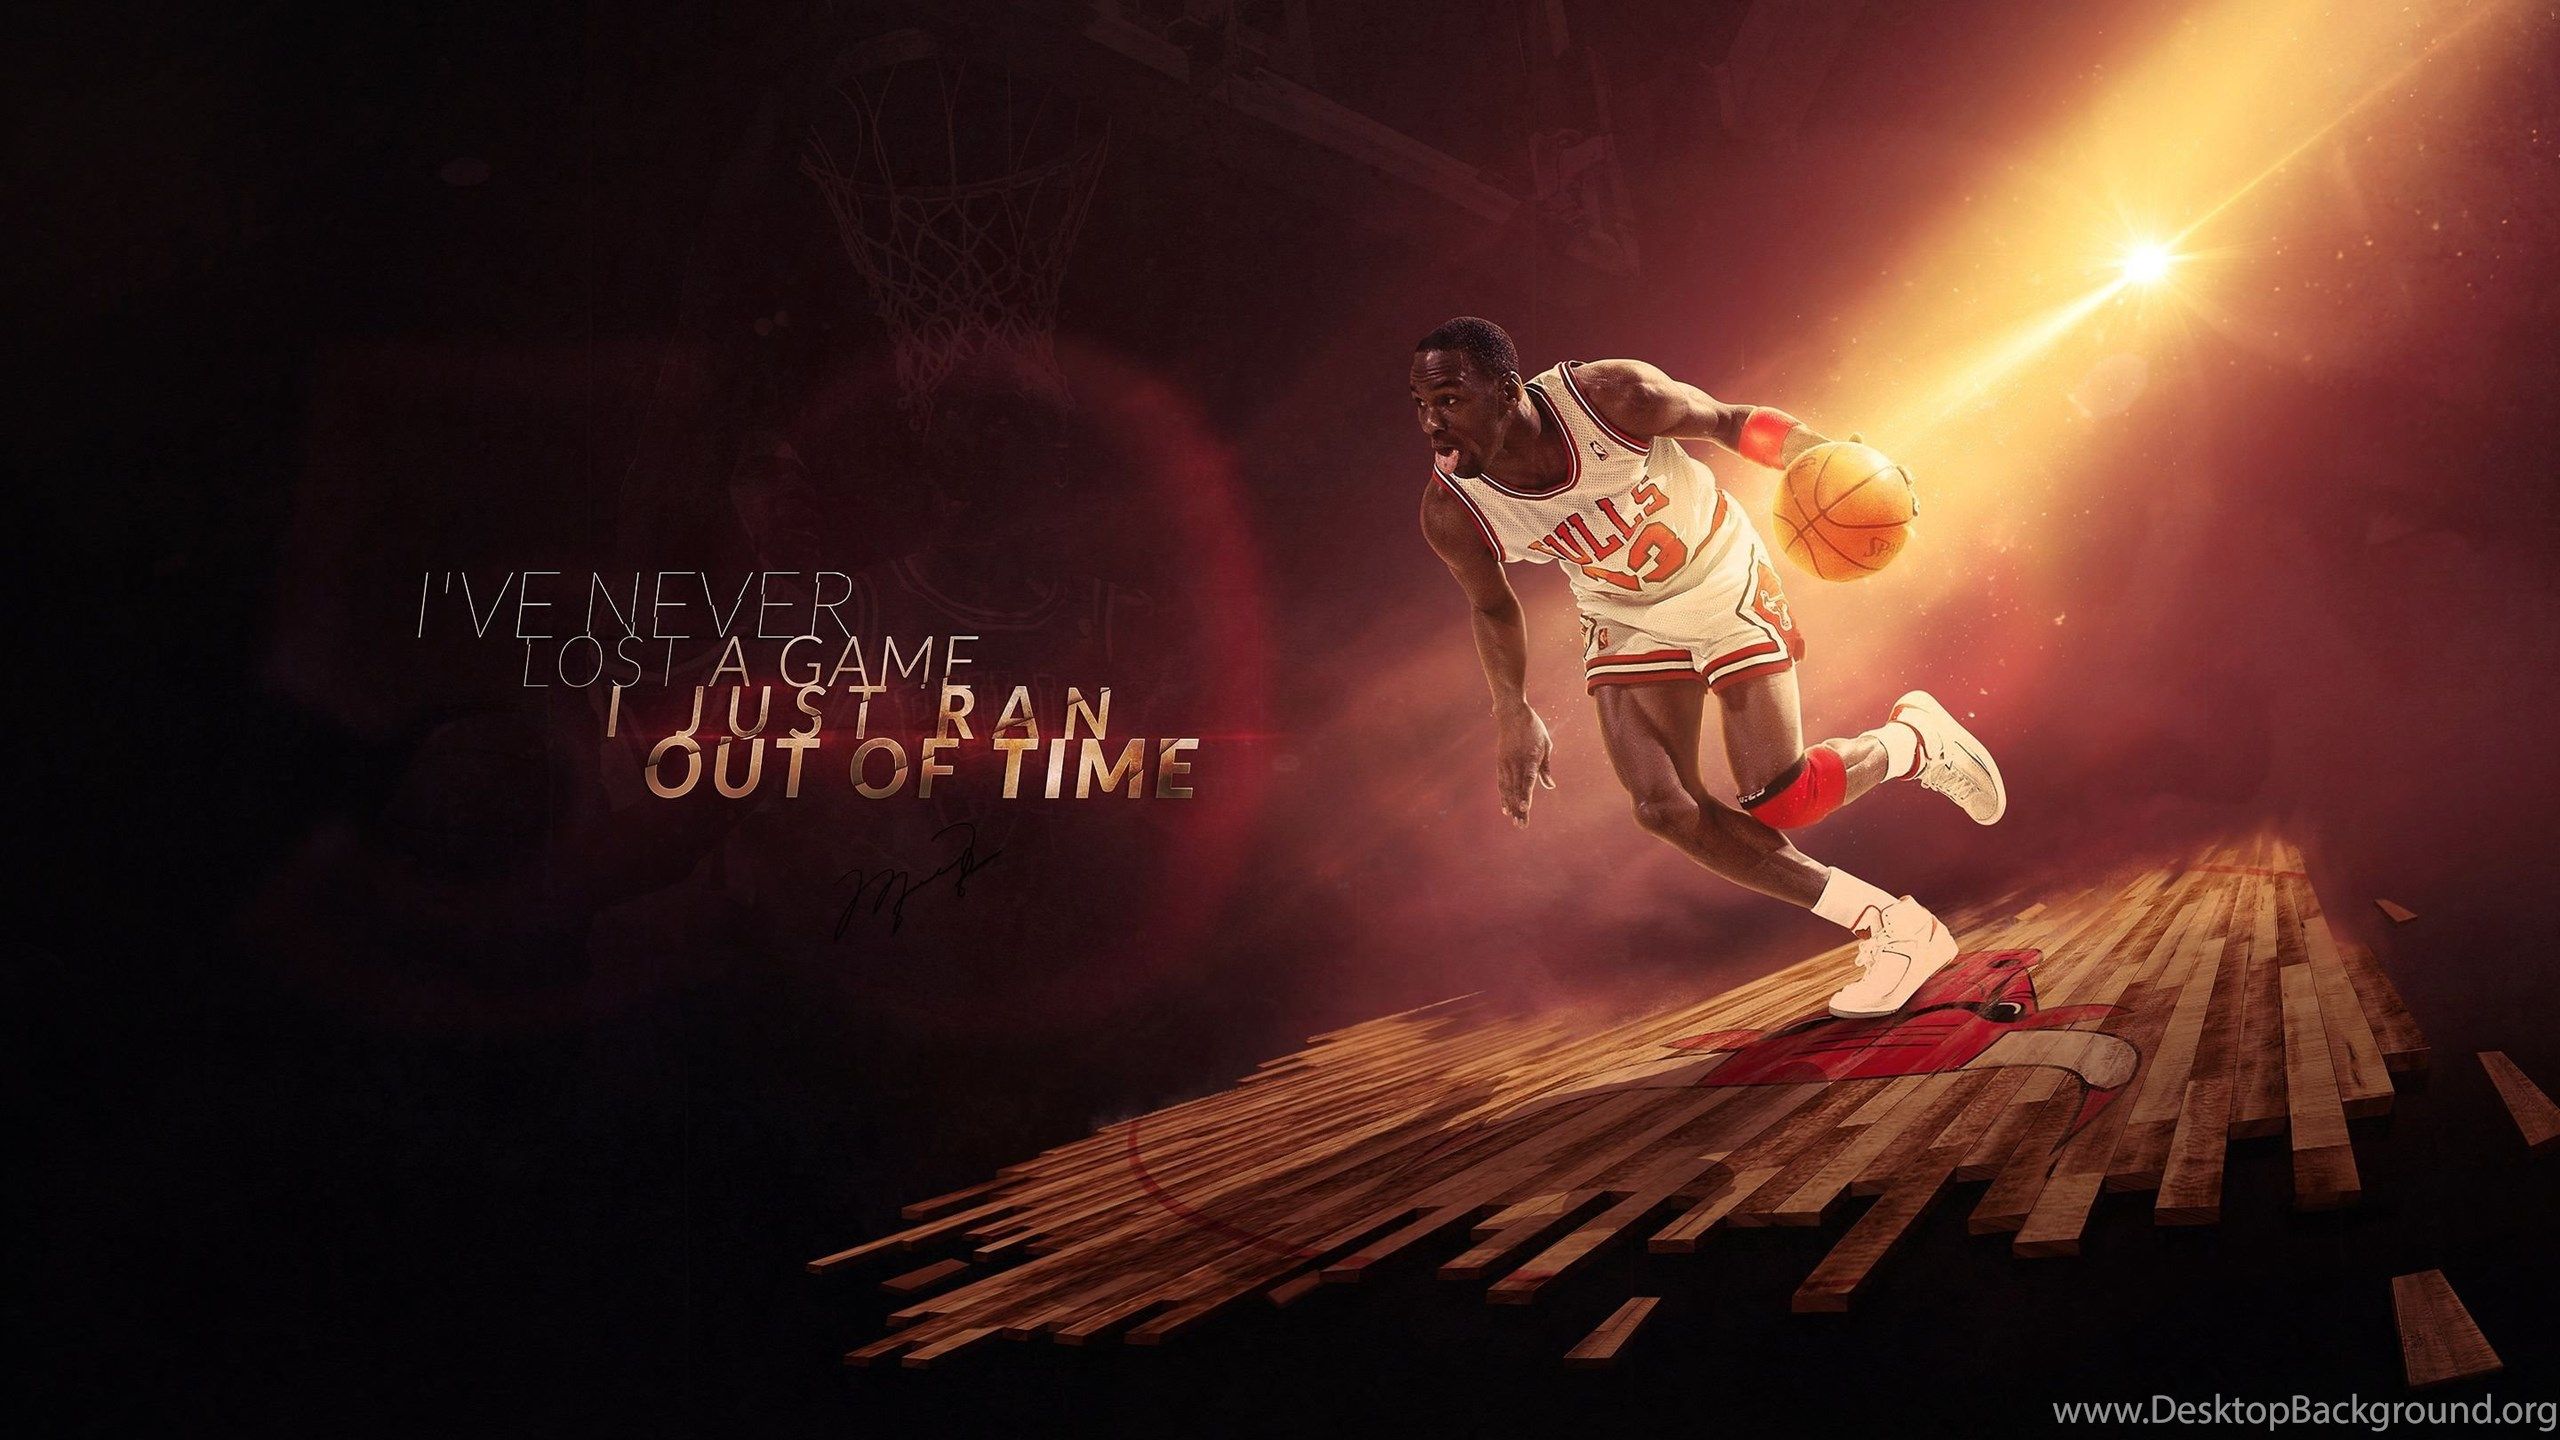 Sports Nba Basketball Michael Jordan Chicago Bulls Dennis Rodman. Desktop Background